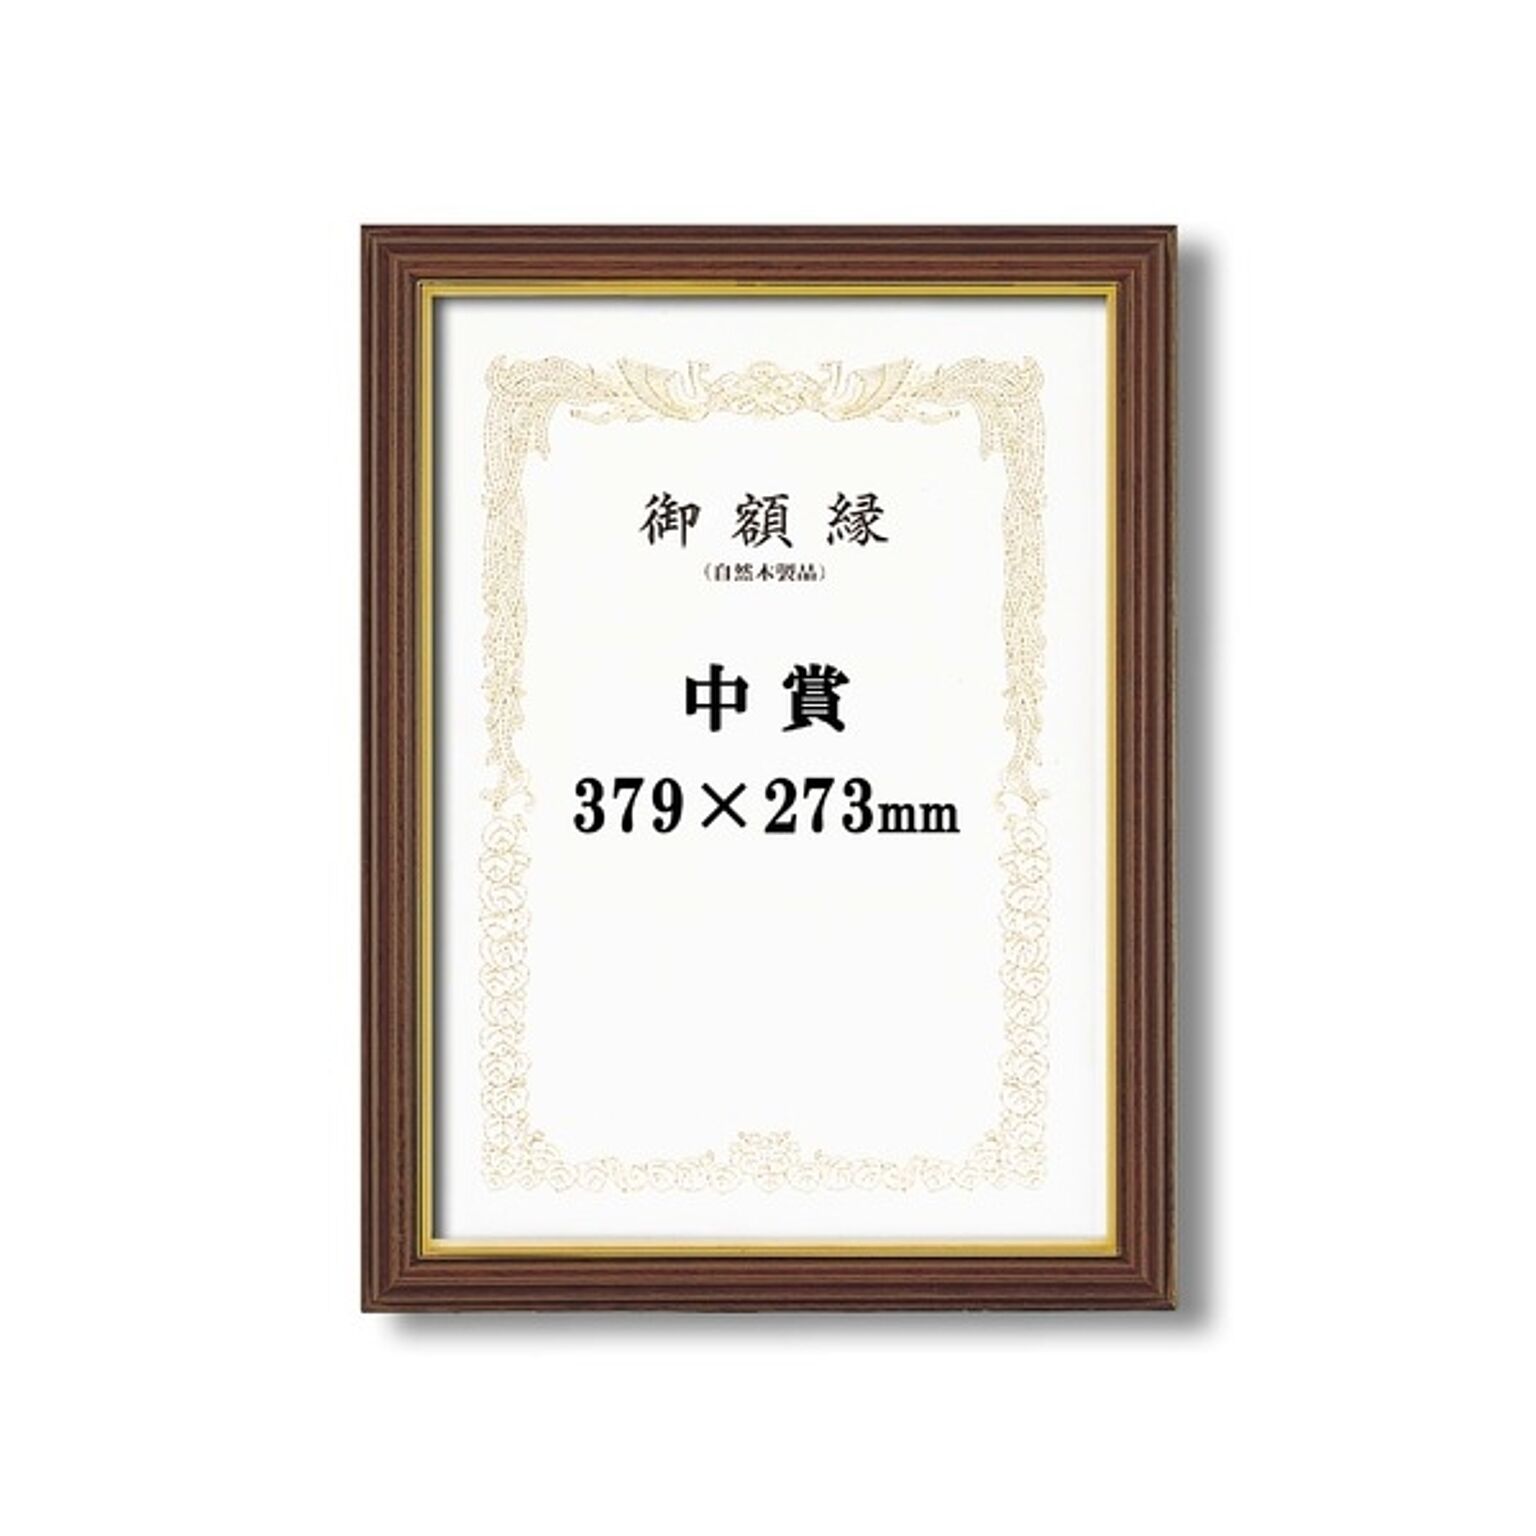 【受注生産 賞状額】 立体的な木製賞状額 ブラウン 魁三賞状額 中賞 (379×273mm)